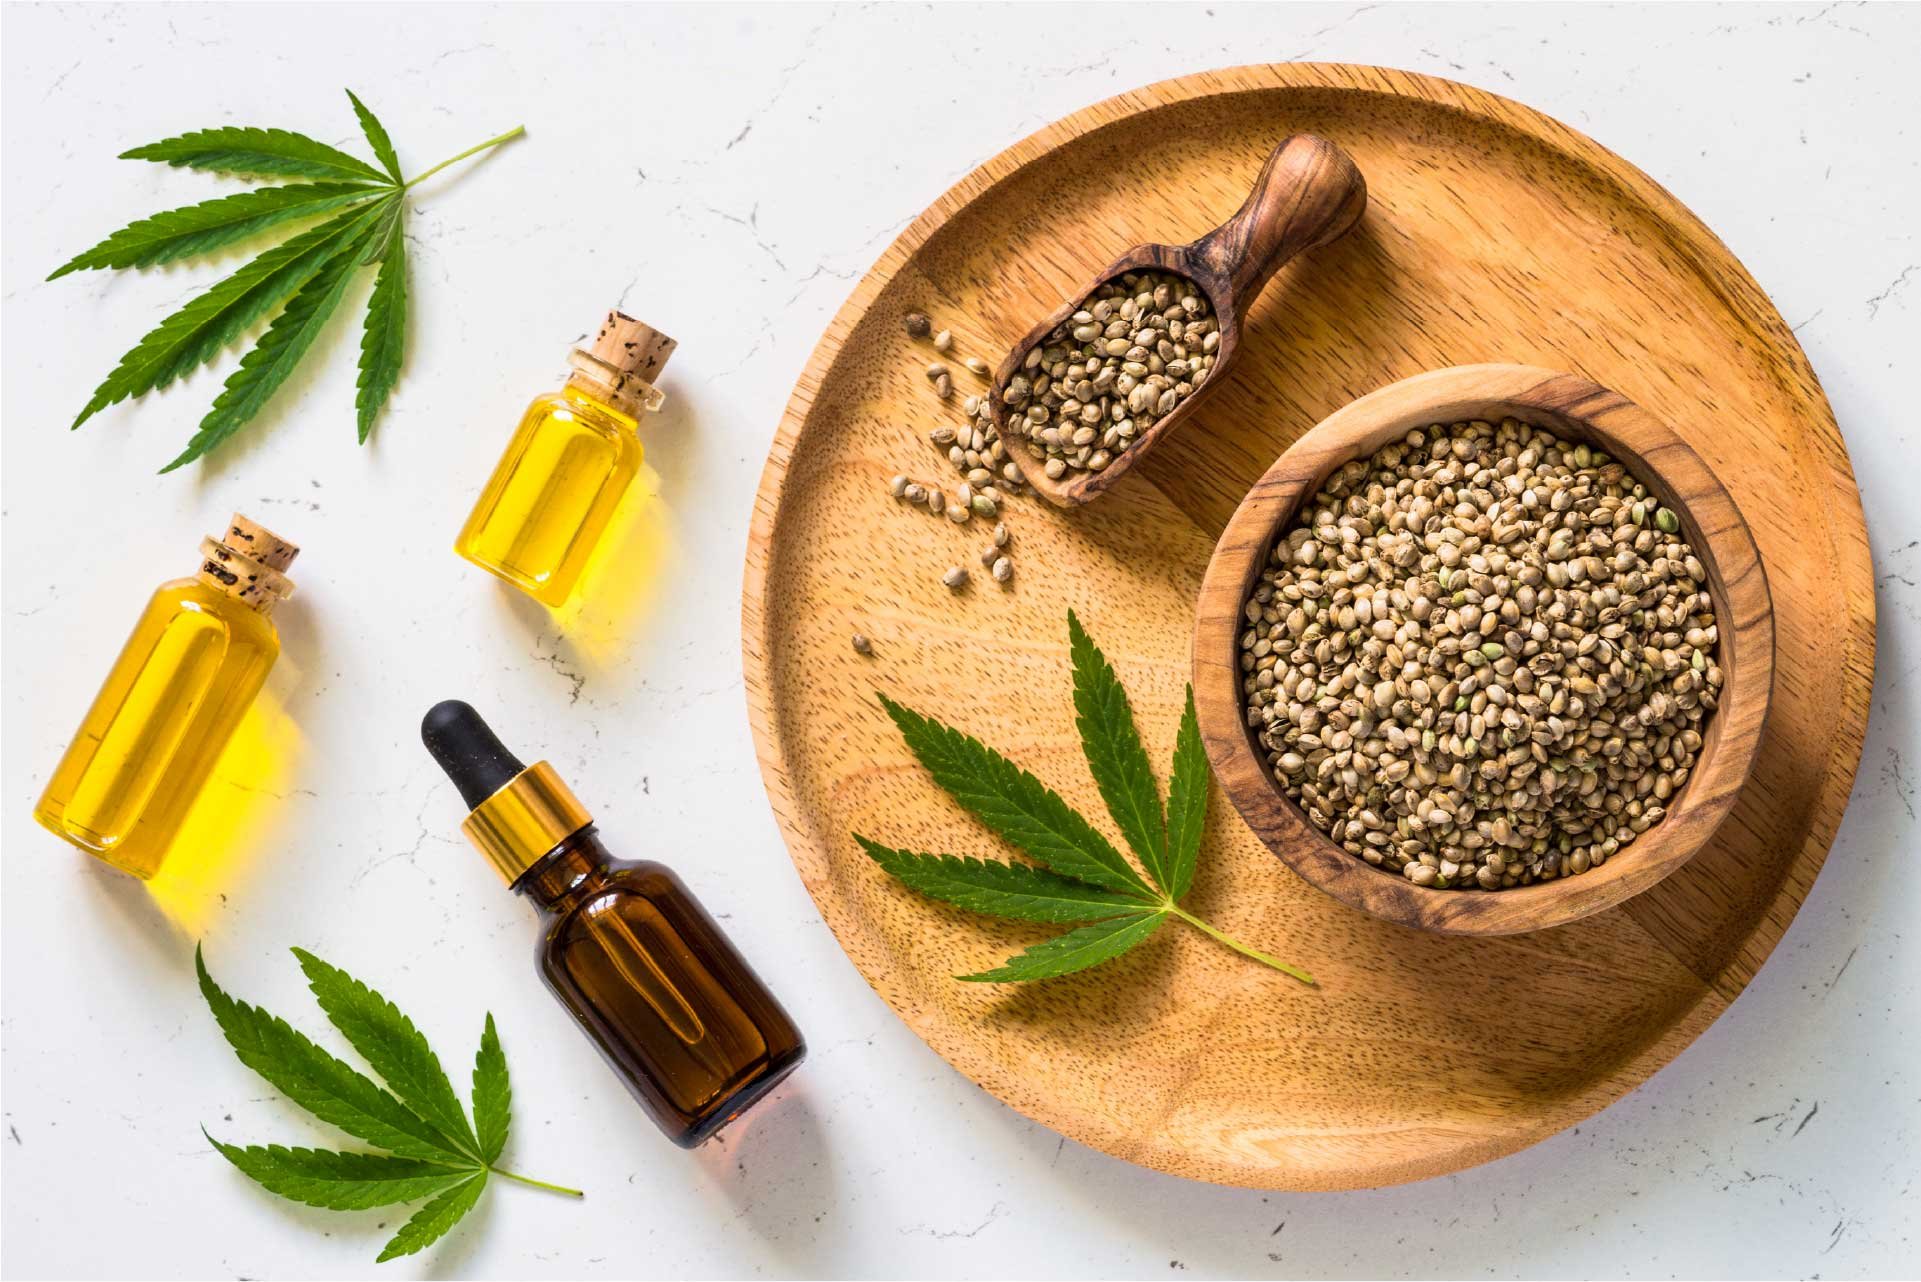 medicinal cannabis oil and hemp seeds